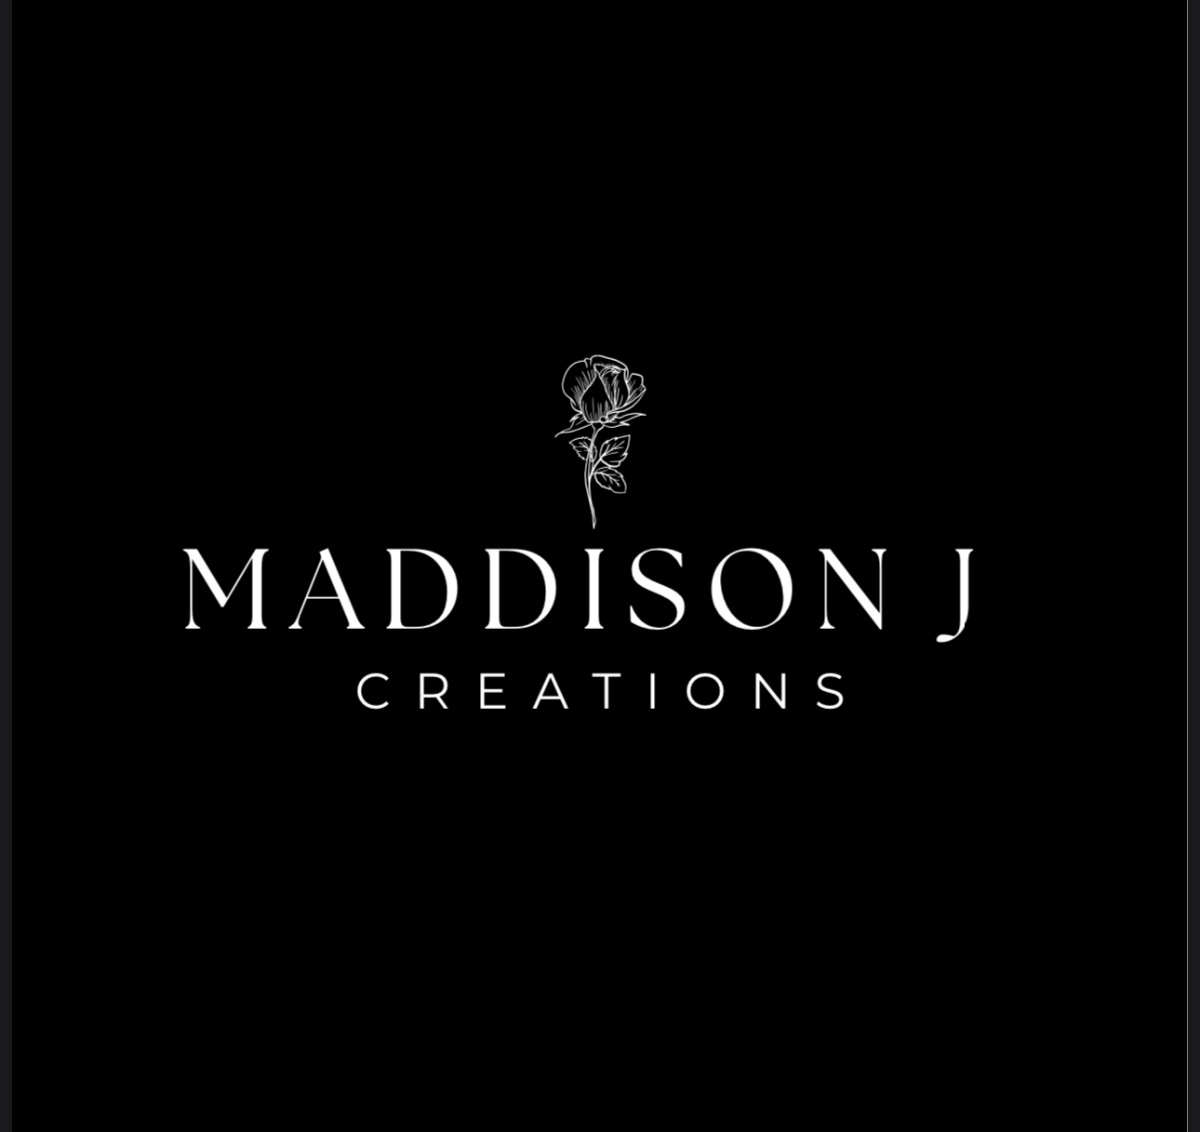 Maddison j Creations-Image-7